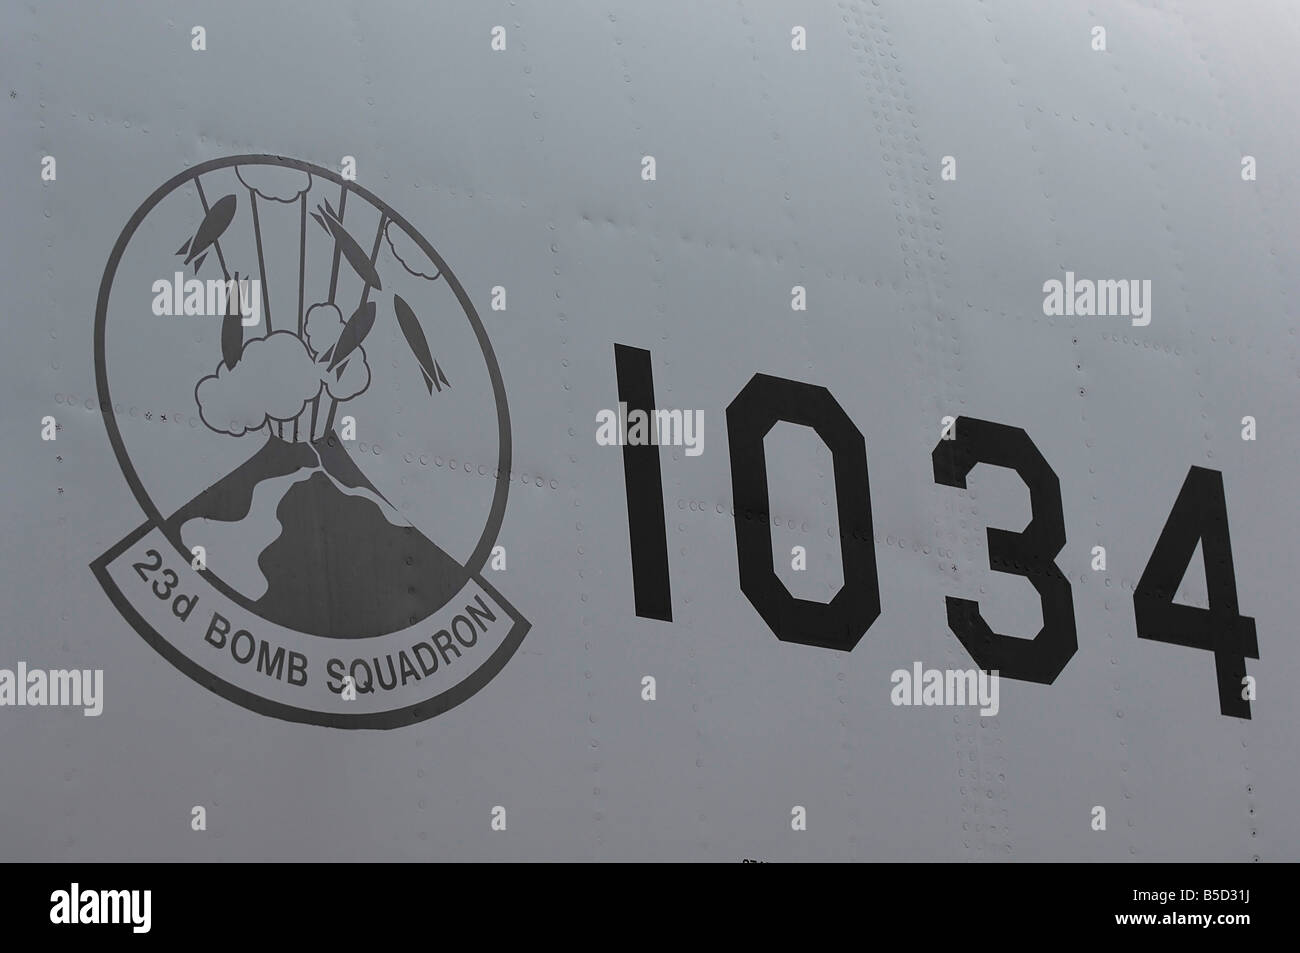 Military 23rd Bomb Squadron aircraft plane aviation bomber Stock Photo